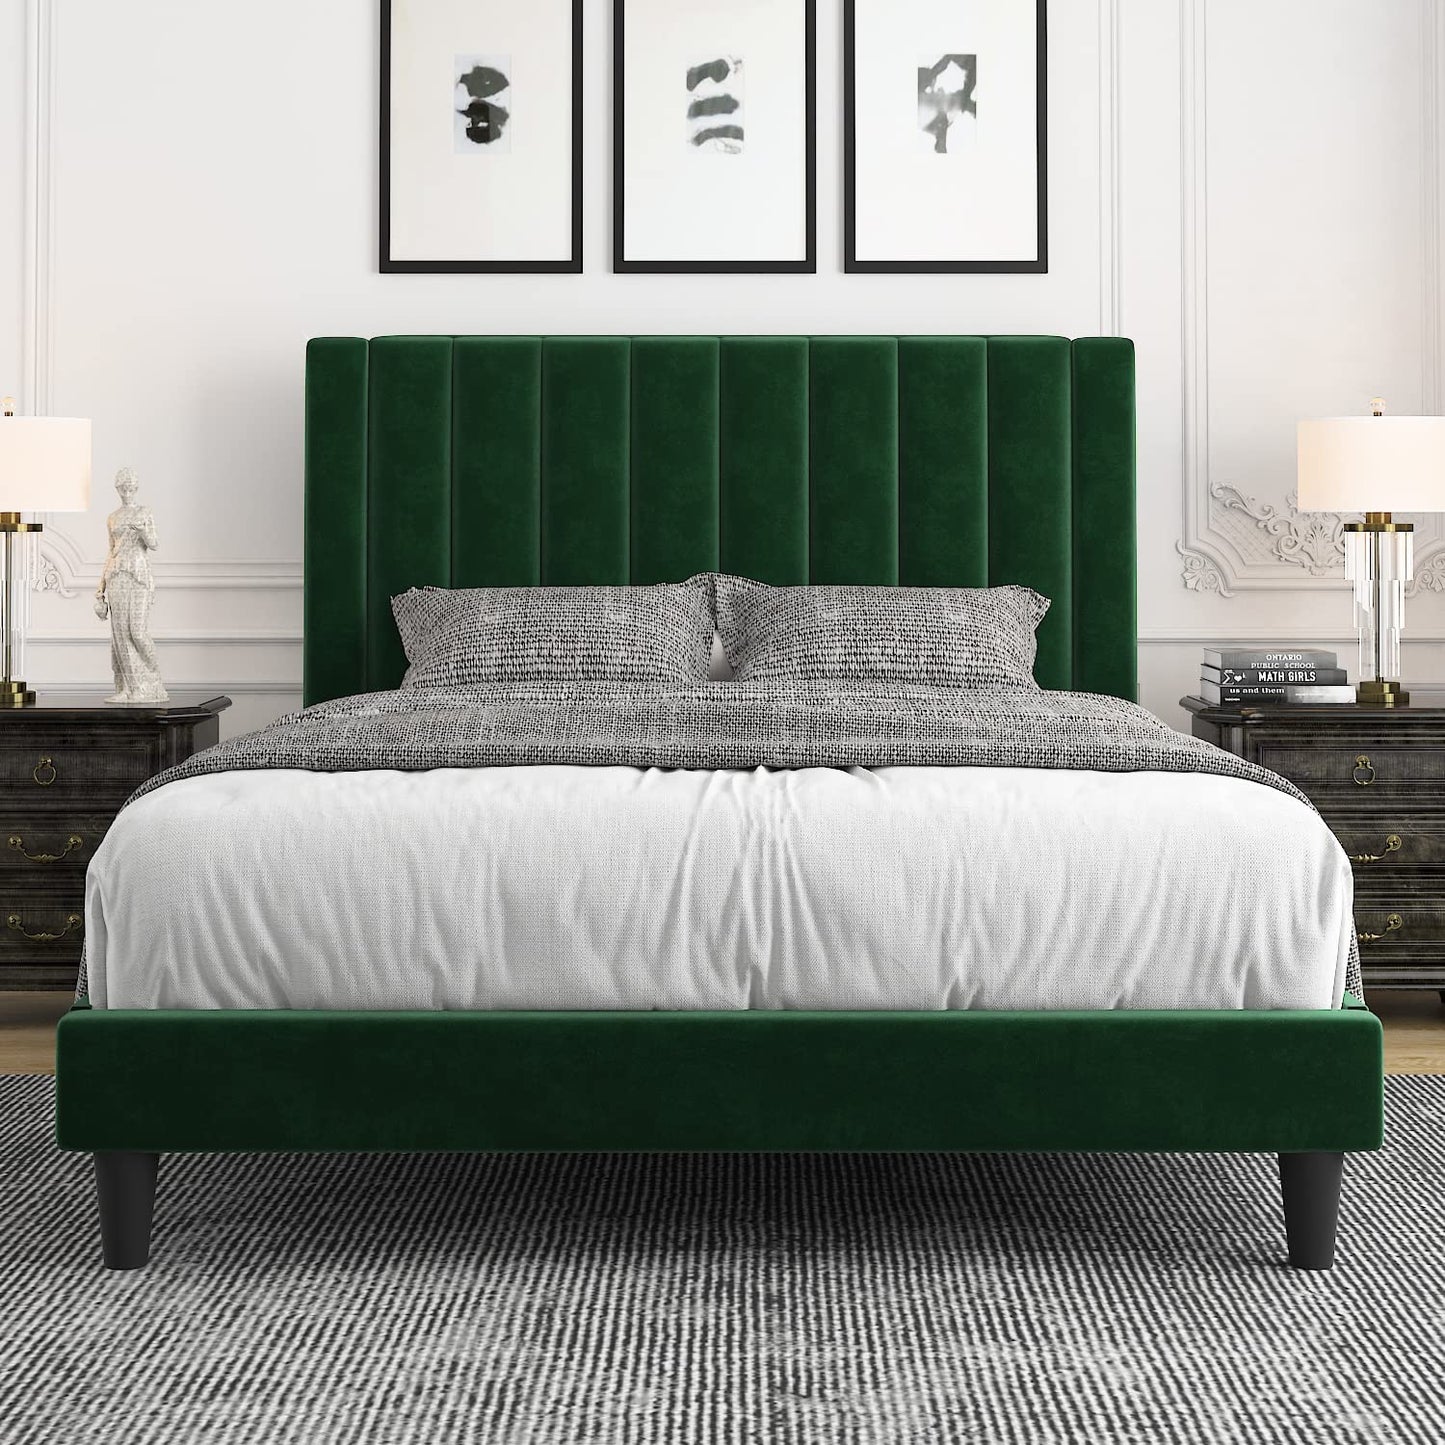 Allewie Full Size Velvet Upholstered Bed Frame with Vertical Channel Tufted Headboard, Green